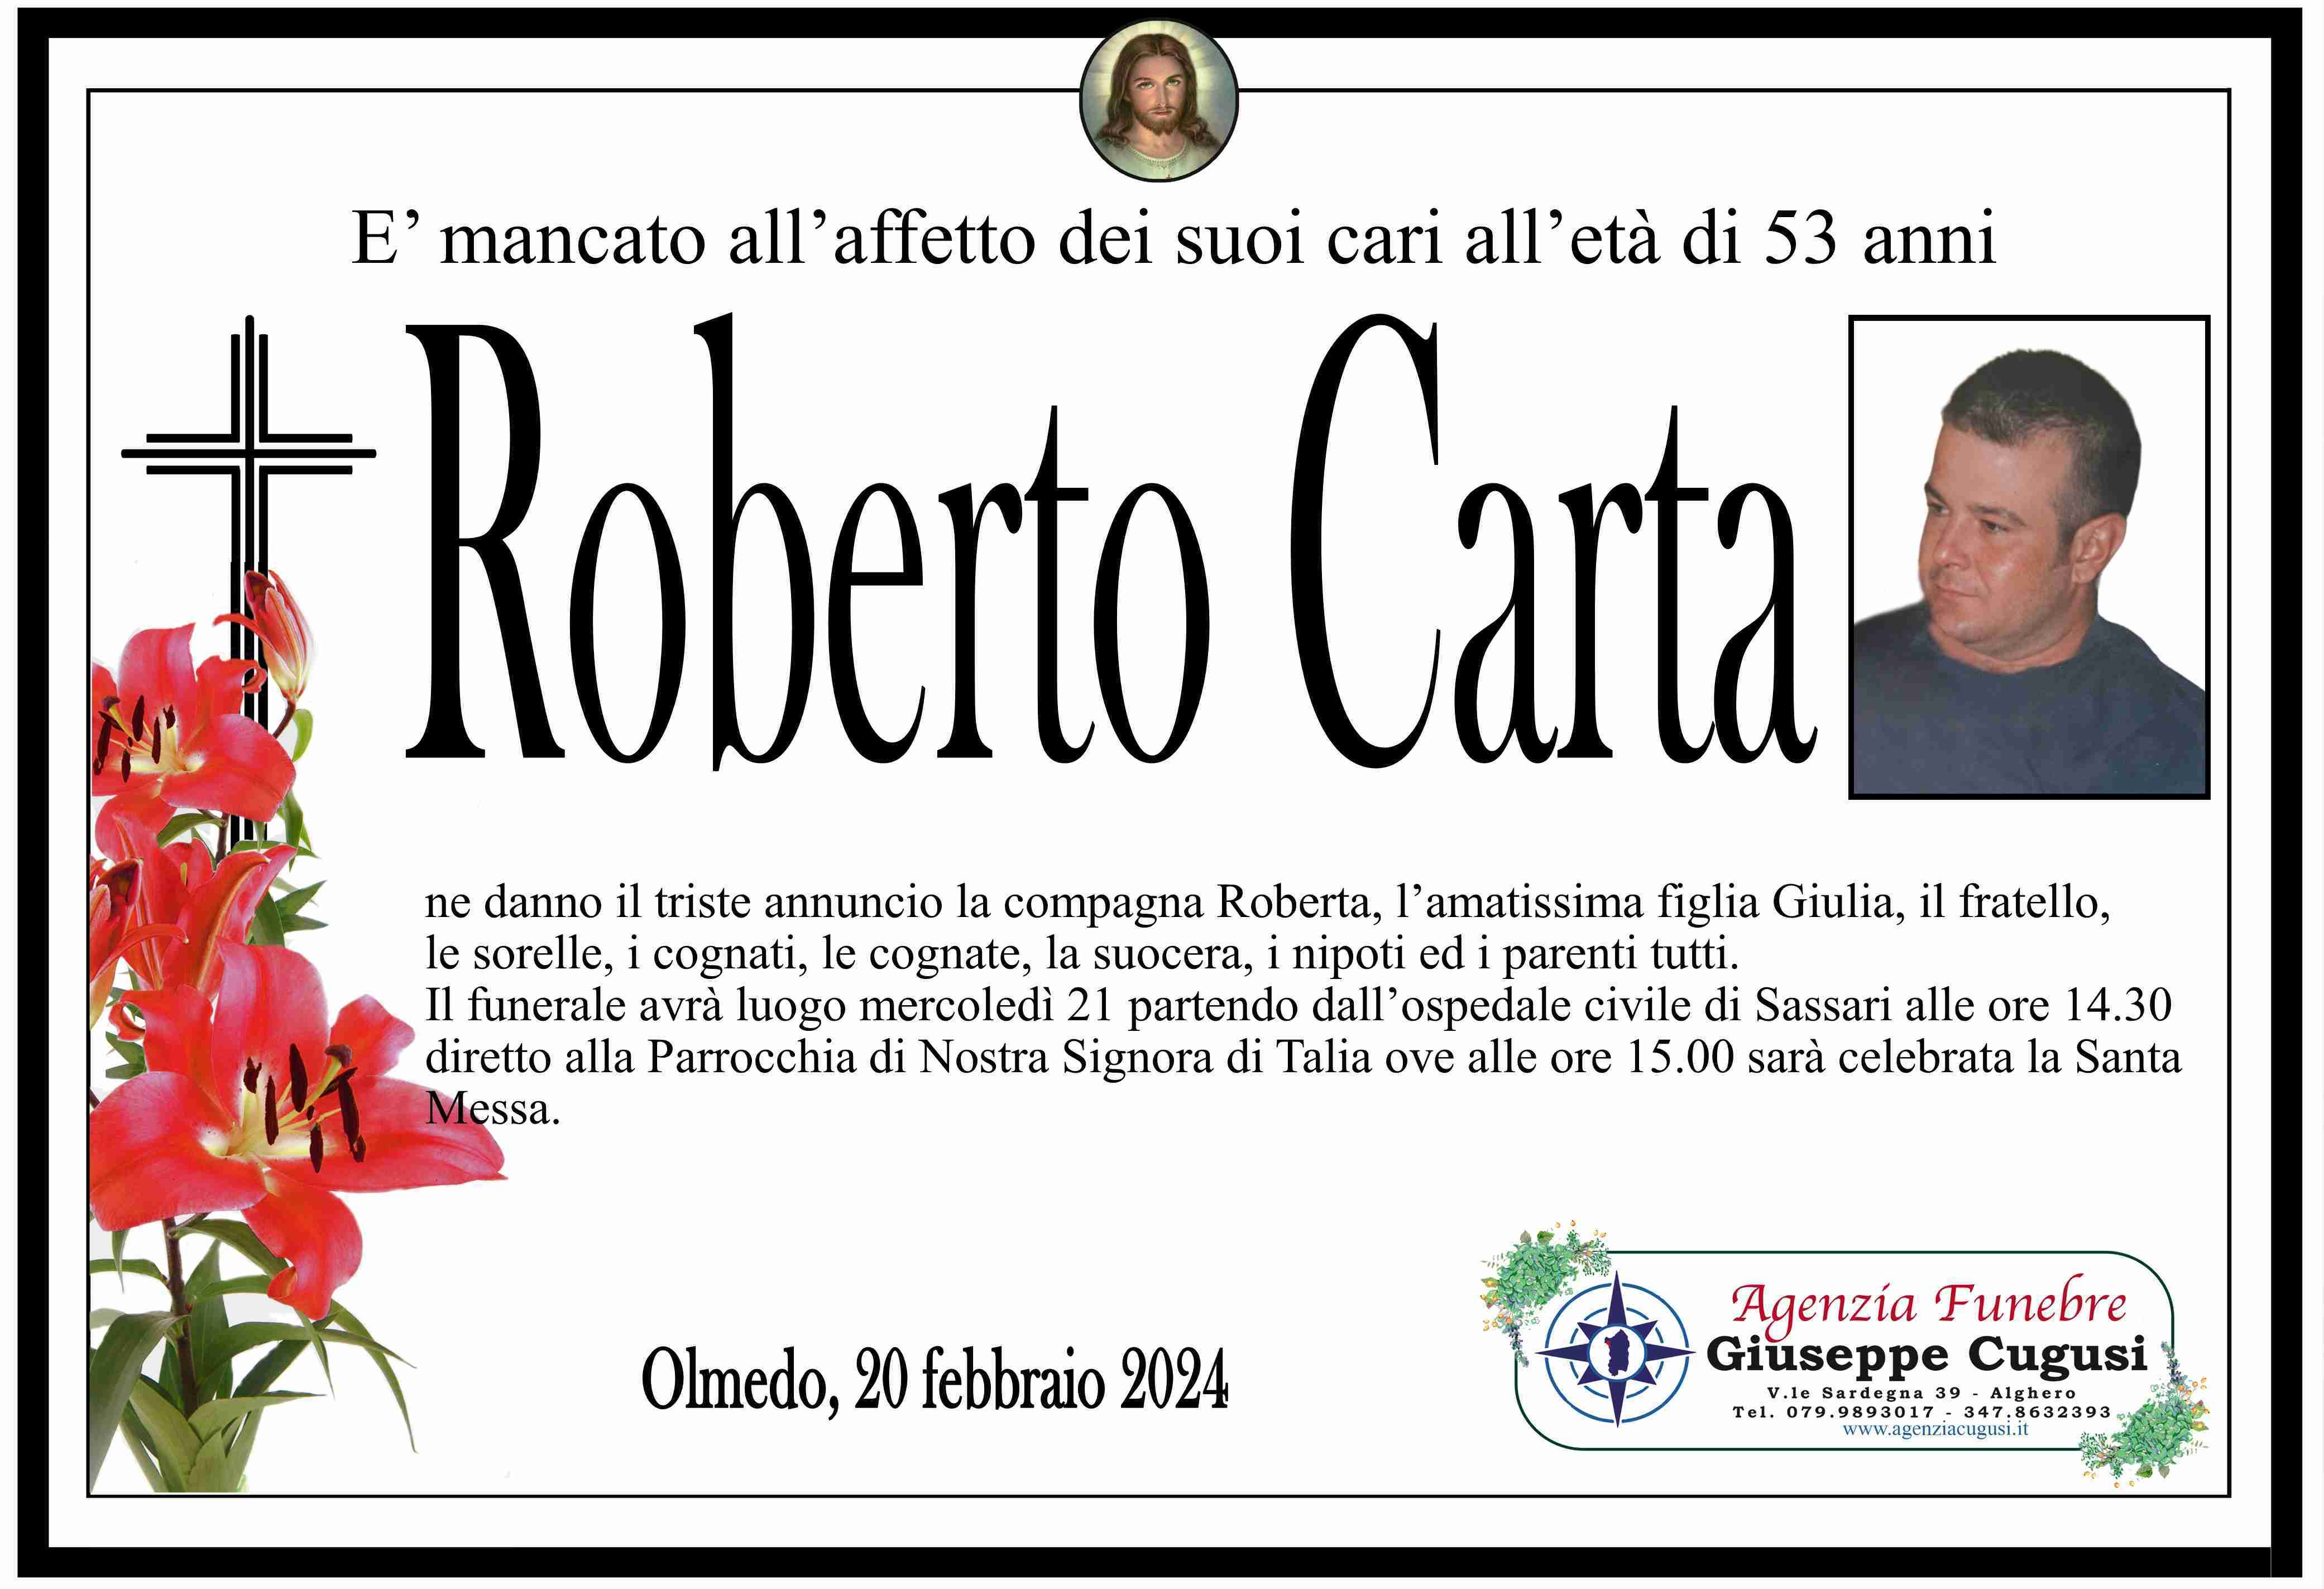 Roberto Carta